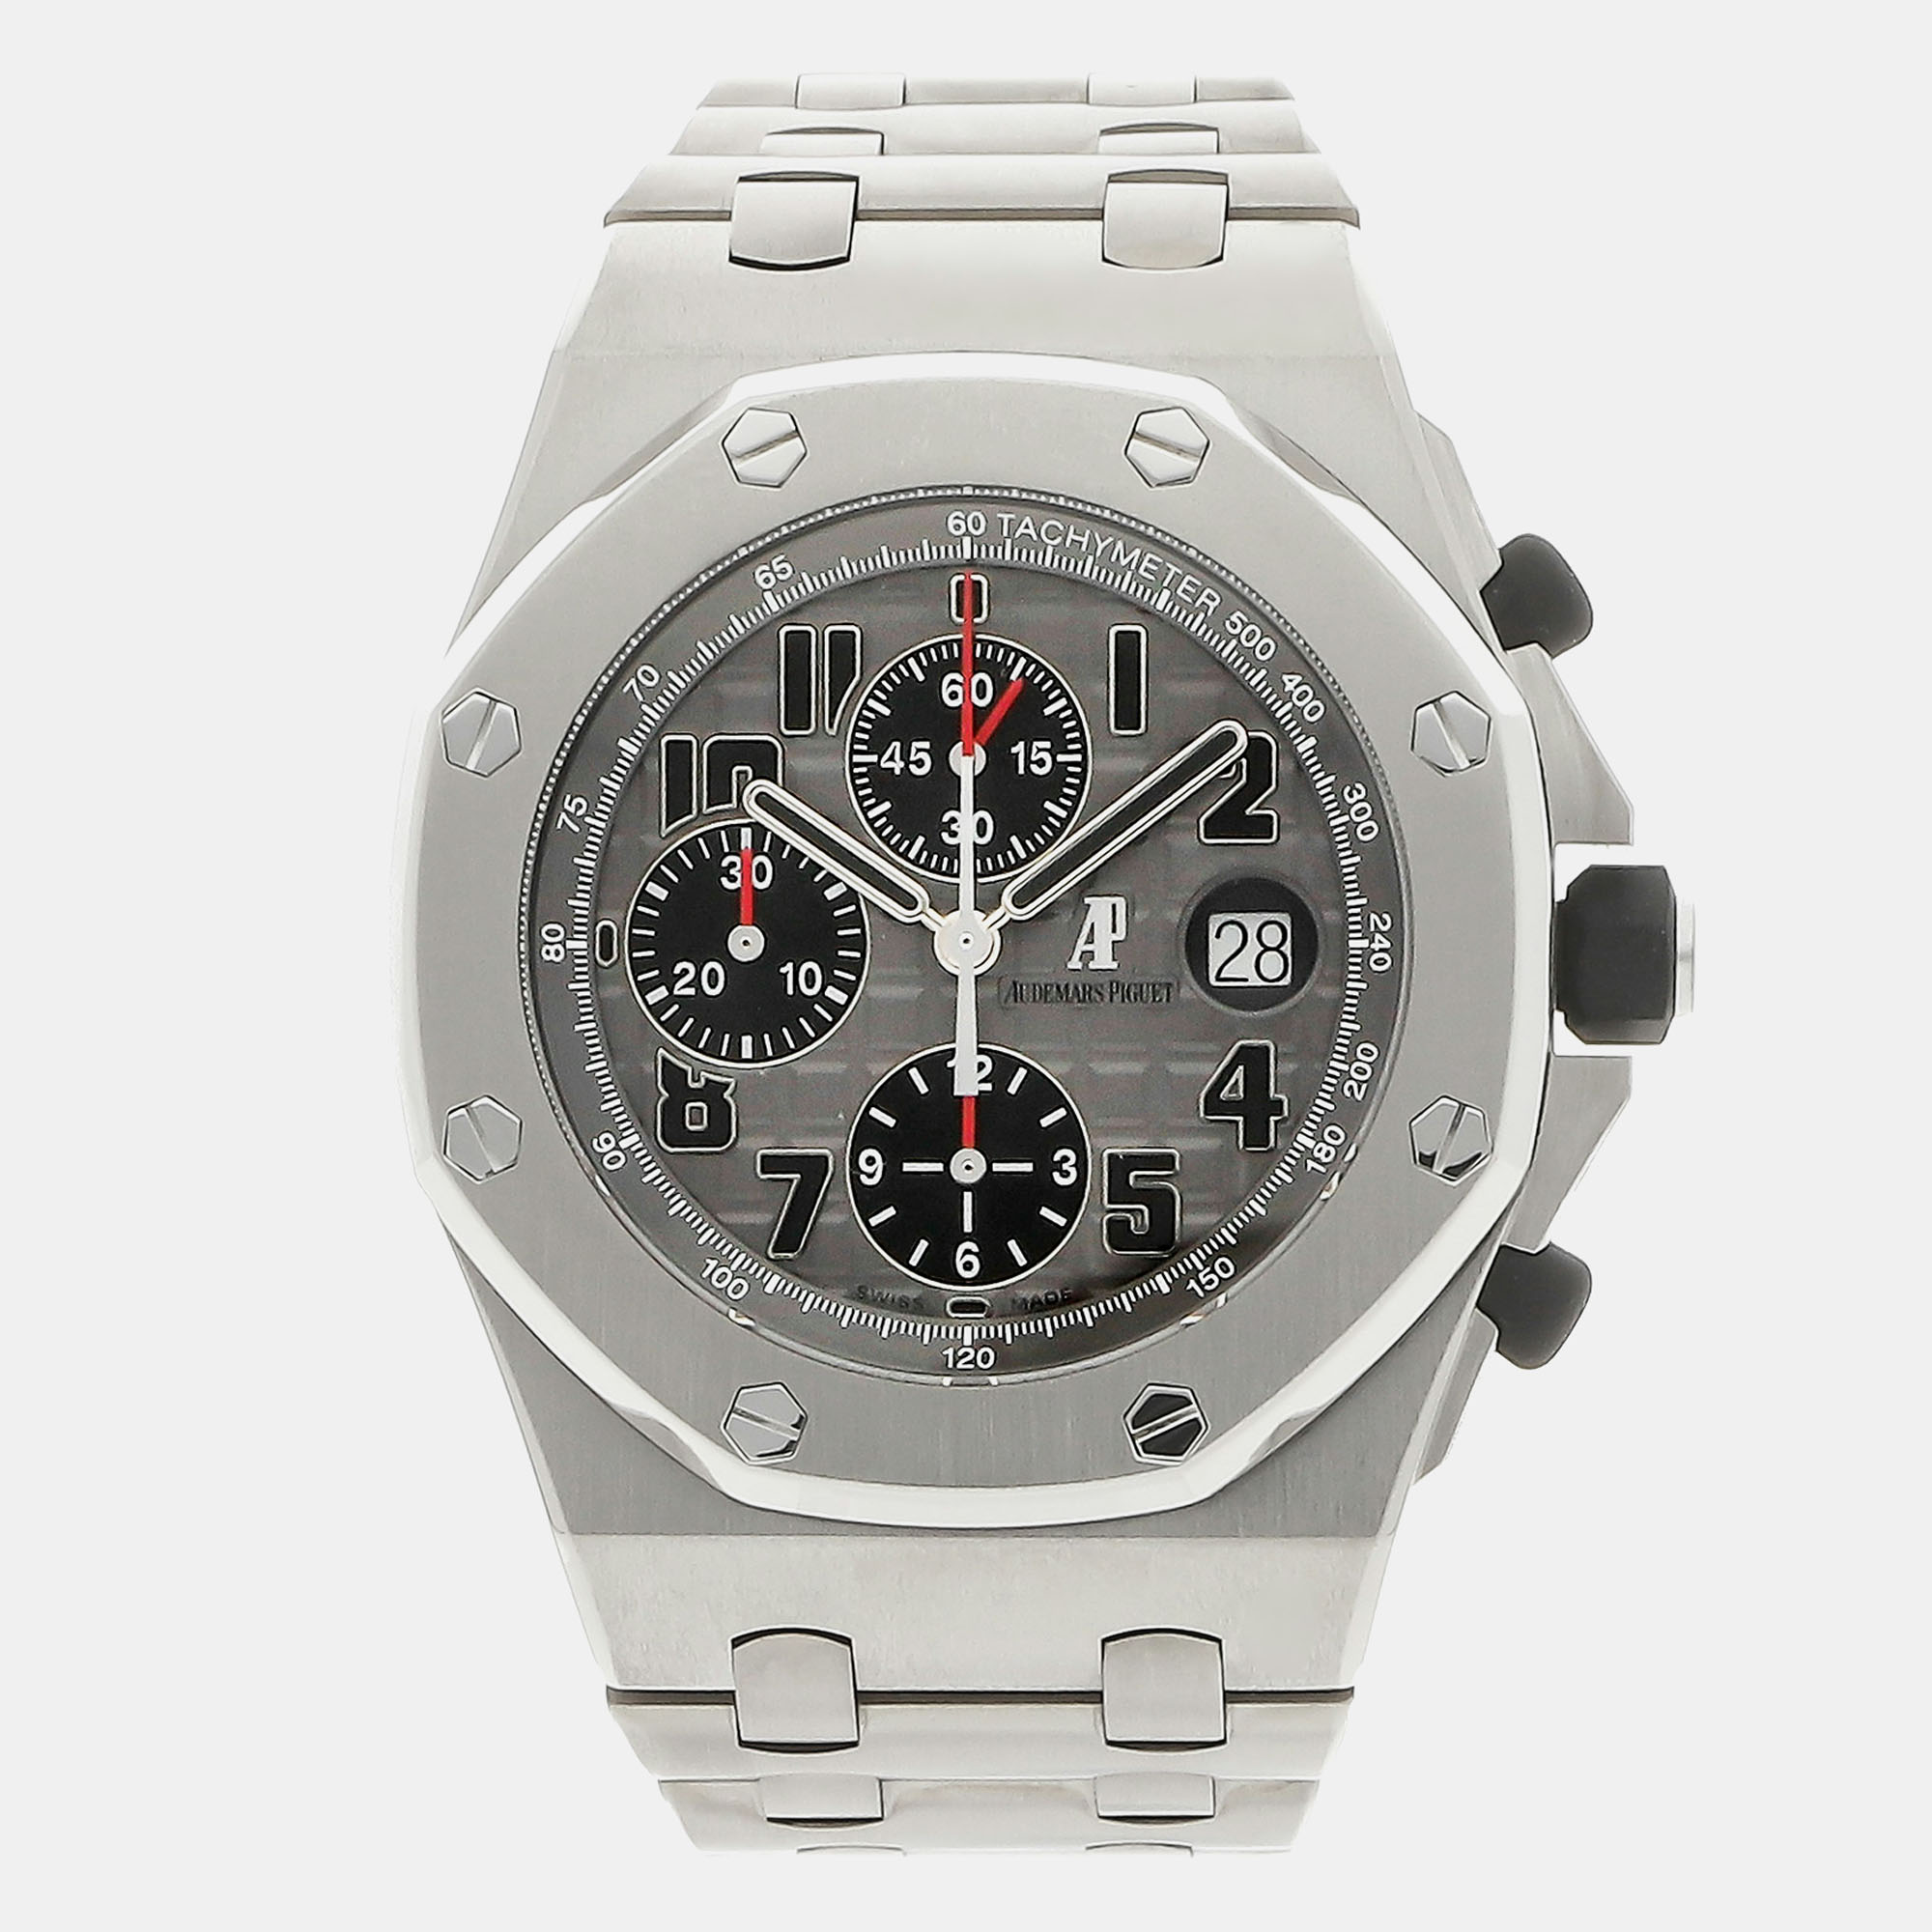 Audemars piguet grey titanium royal oak offshore 26170ti.oo.1000ti.01 automatic men's wristwatch 42 mm